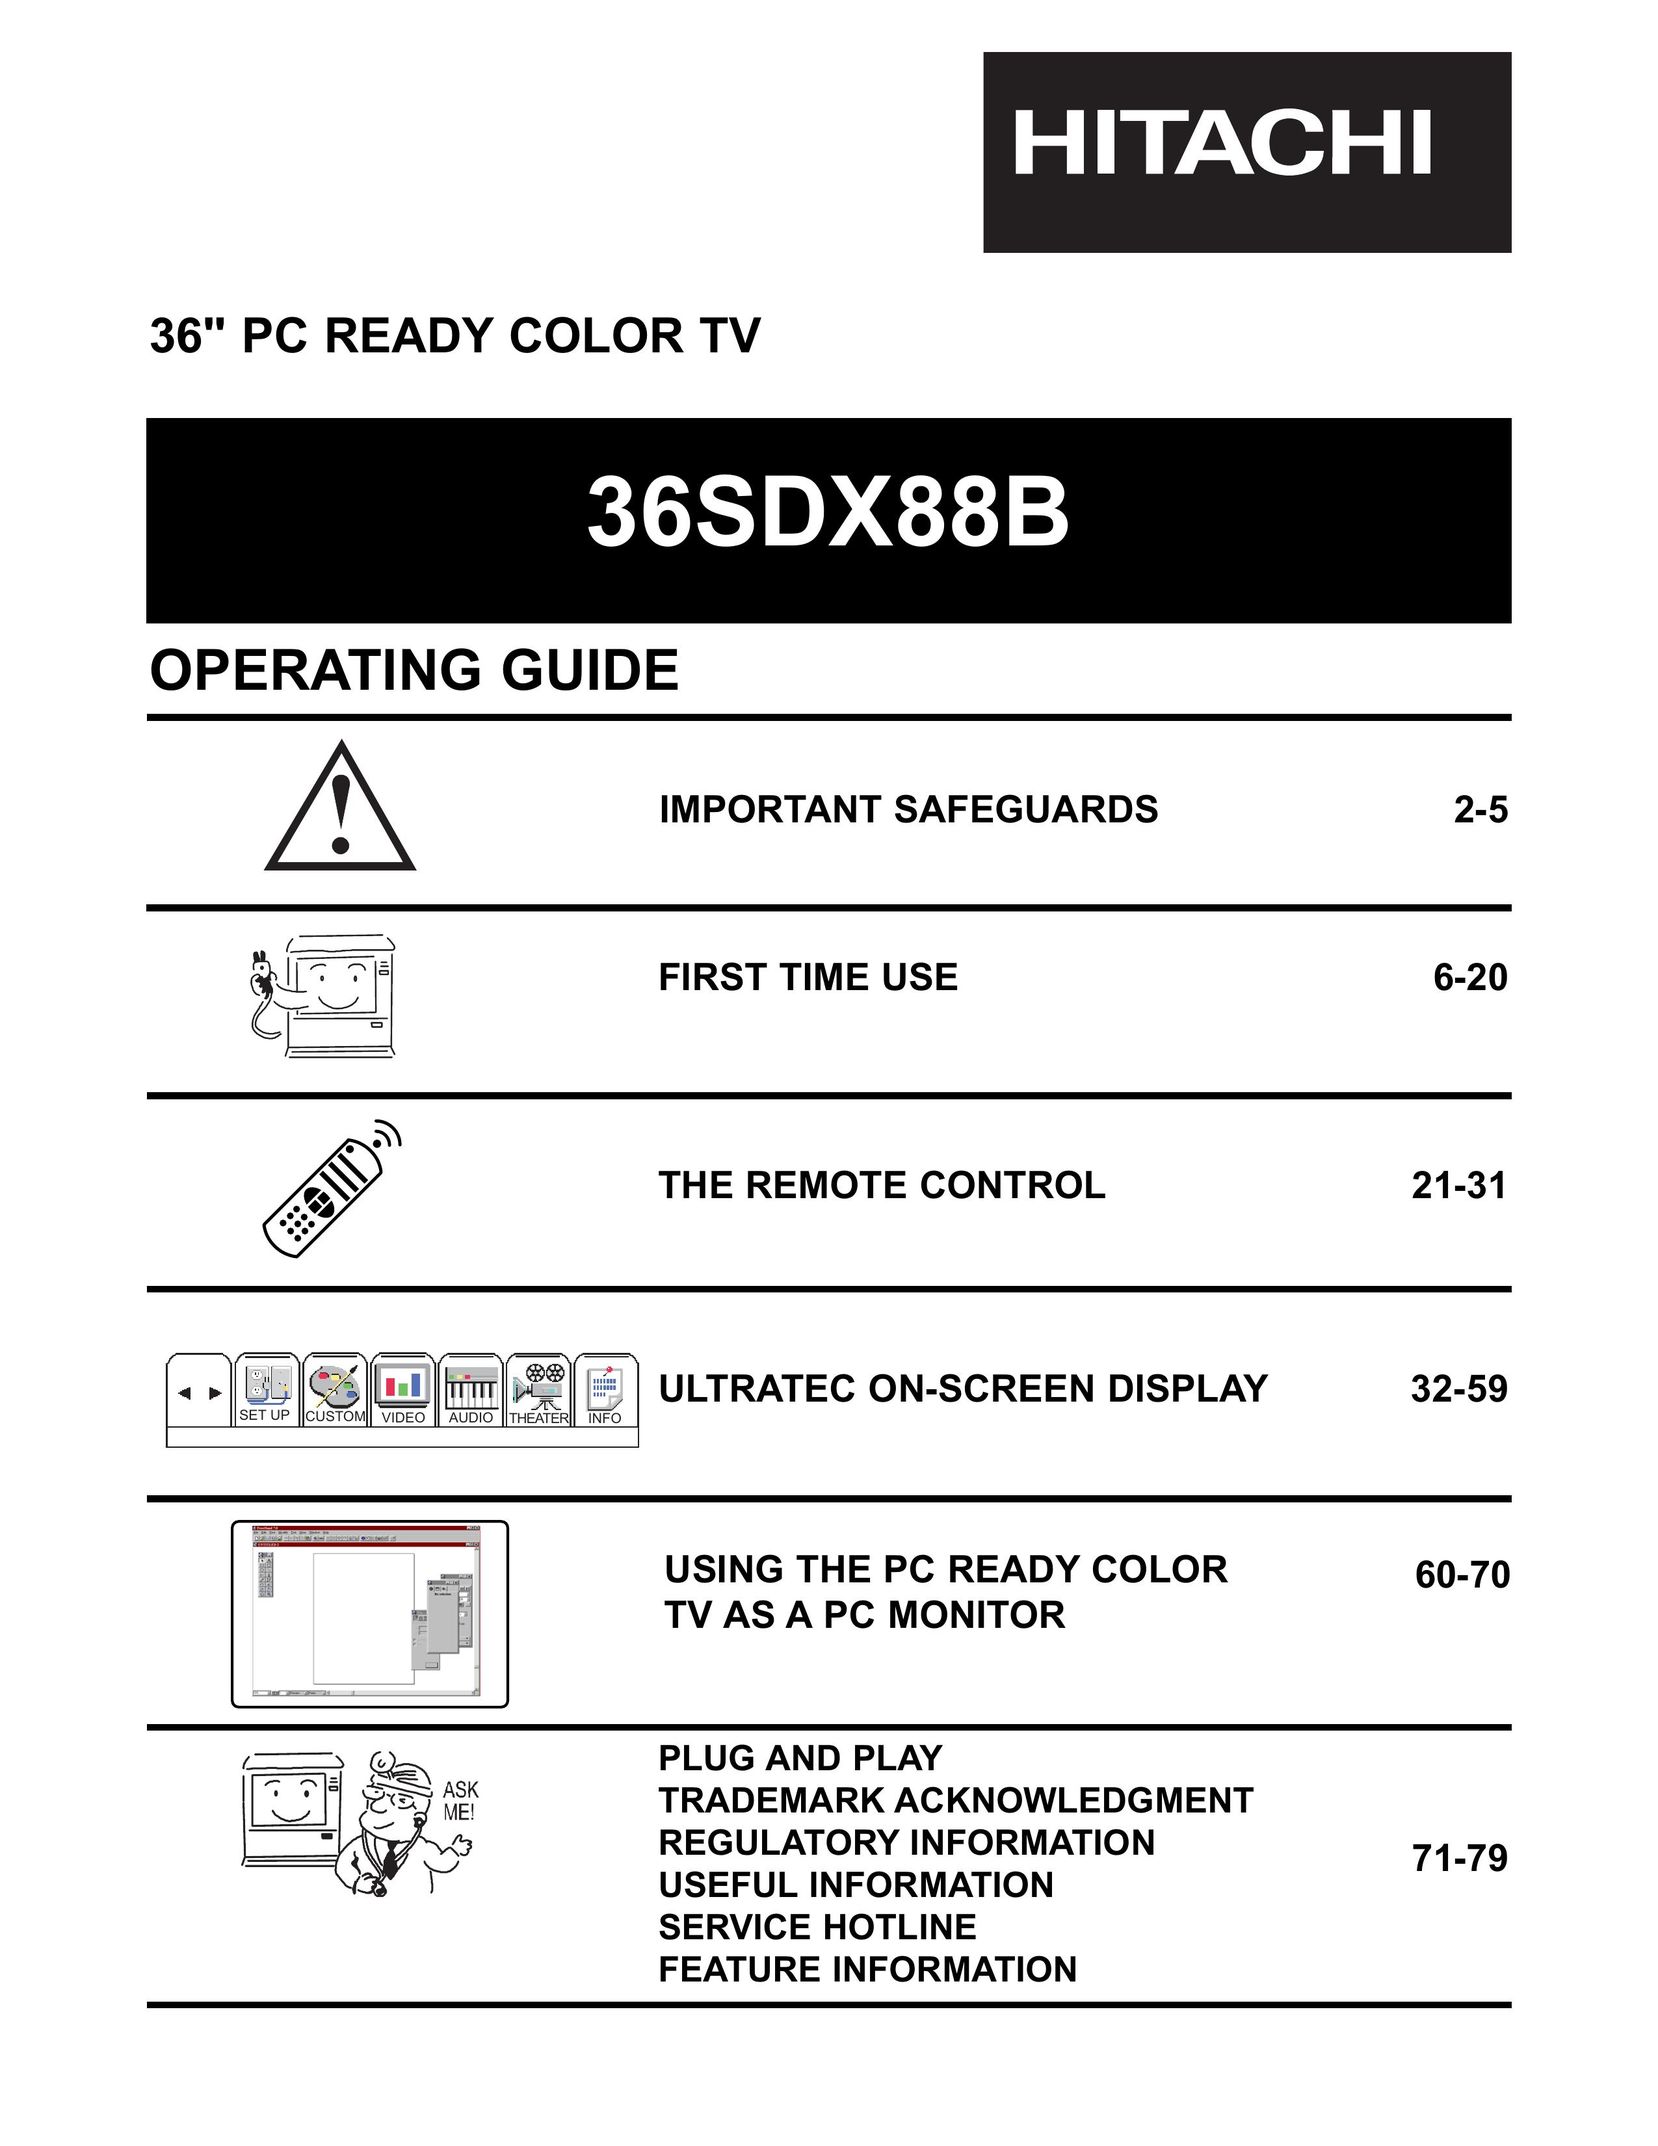 Hitachi 36SDX88B CRT Television User Manual